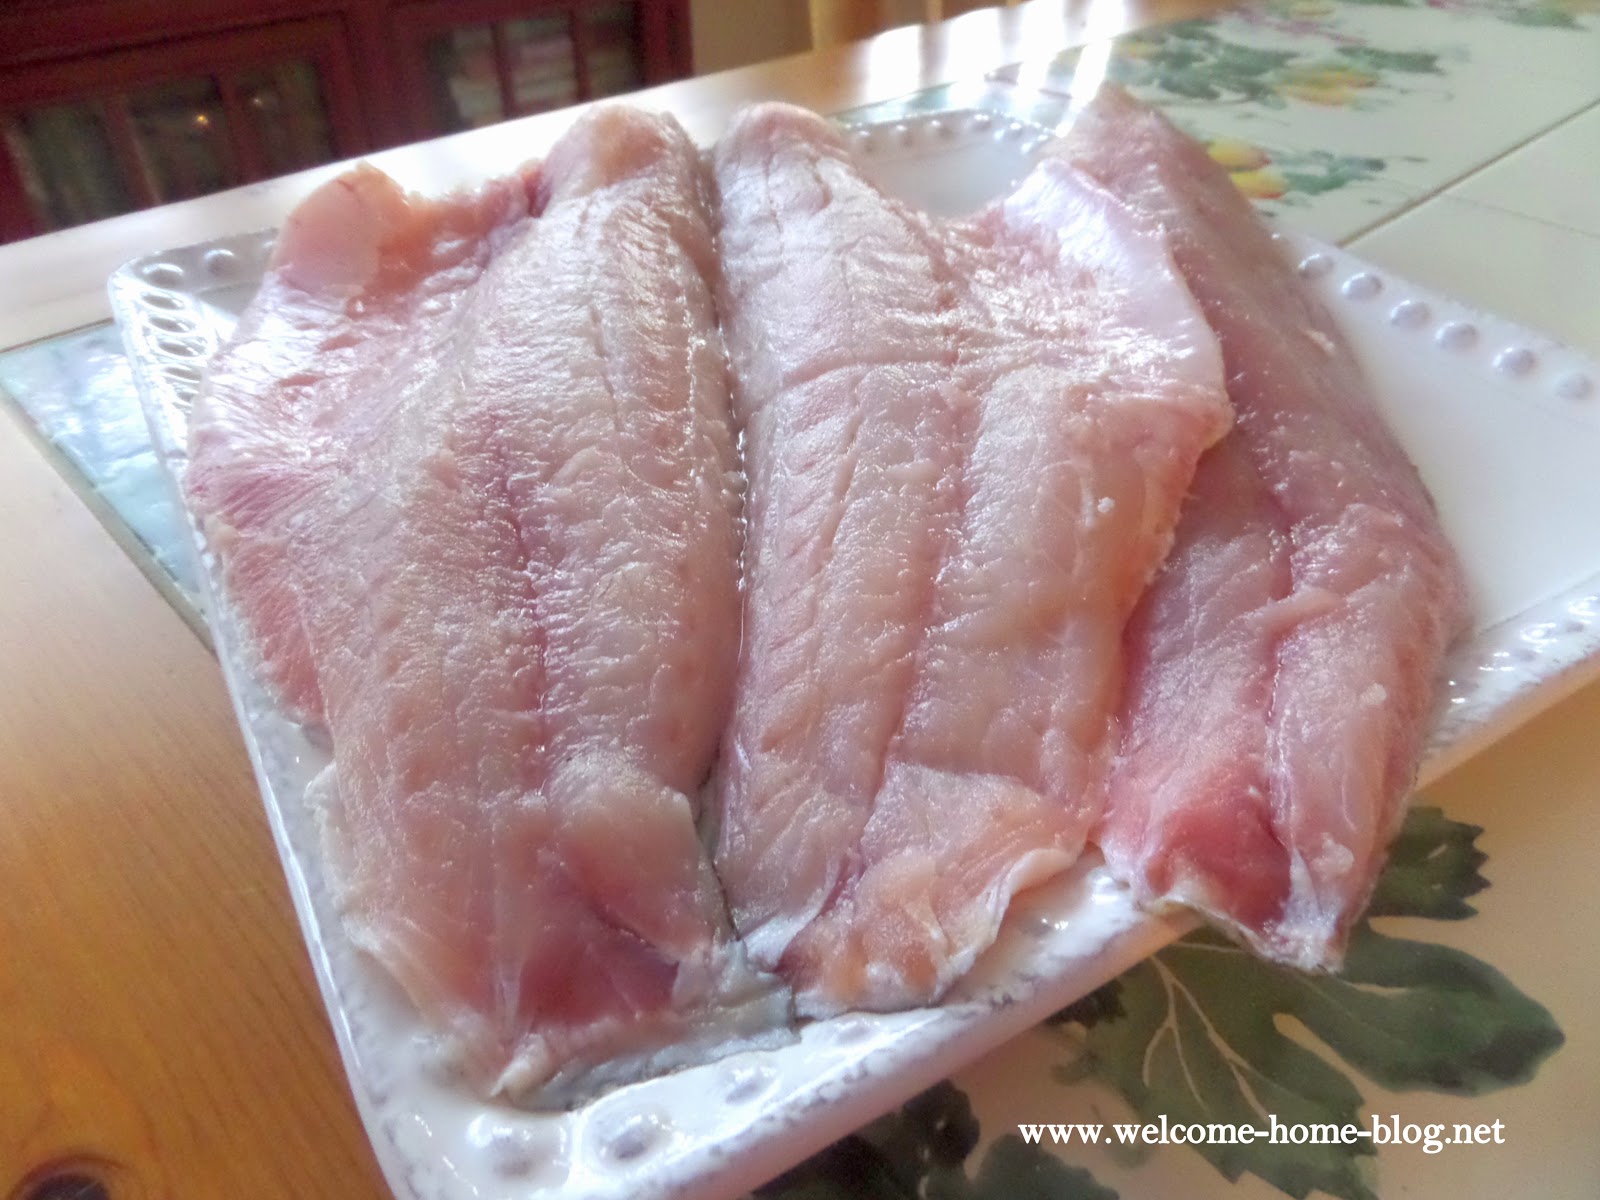 Welcome Home Blog: Pan seared Rockfish (AKA Striped Bass)